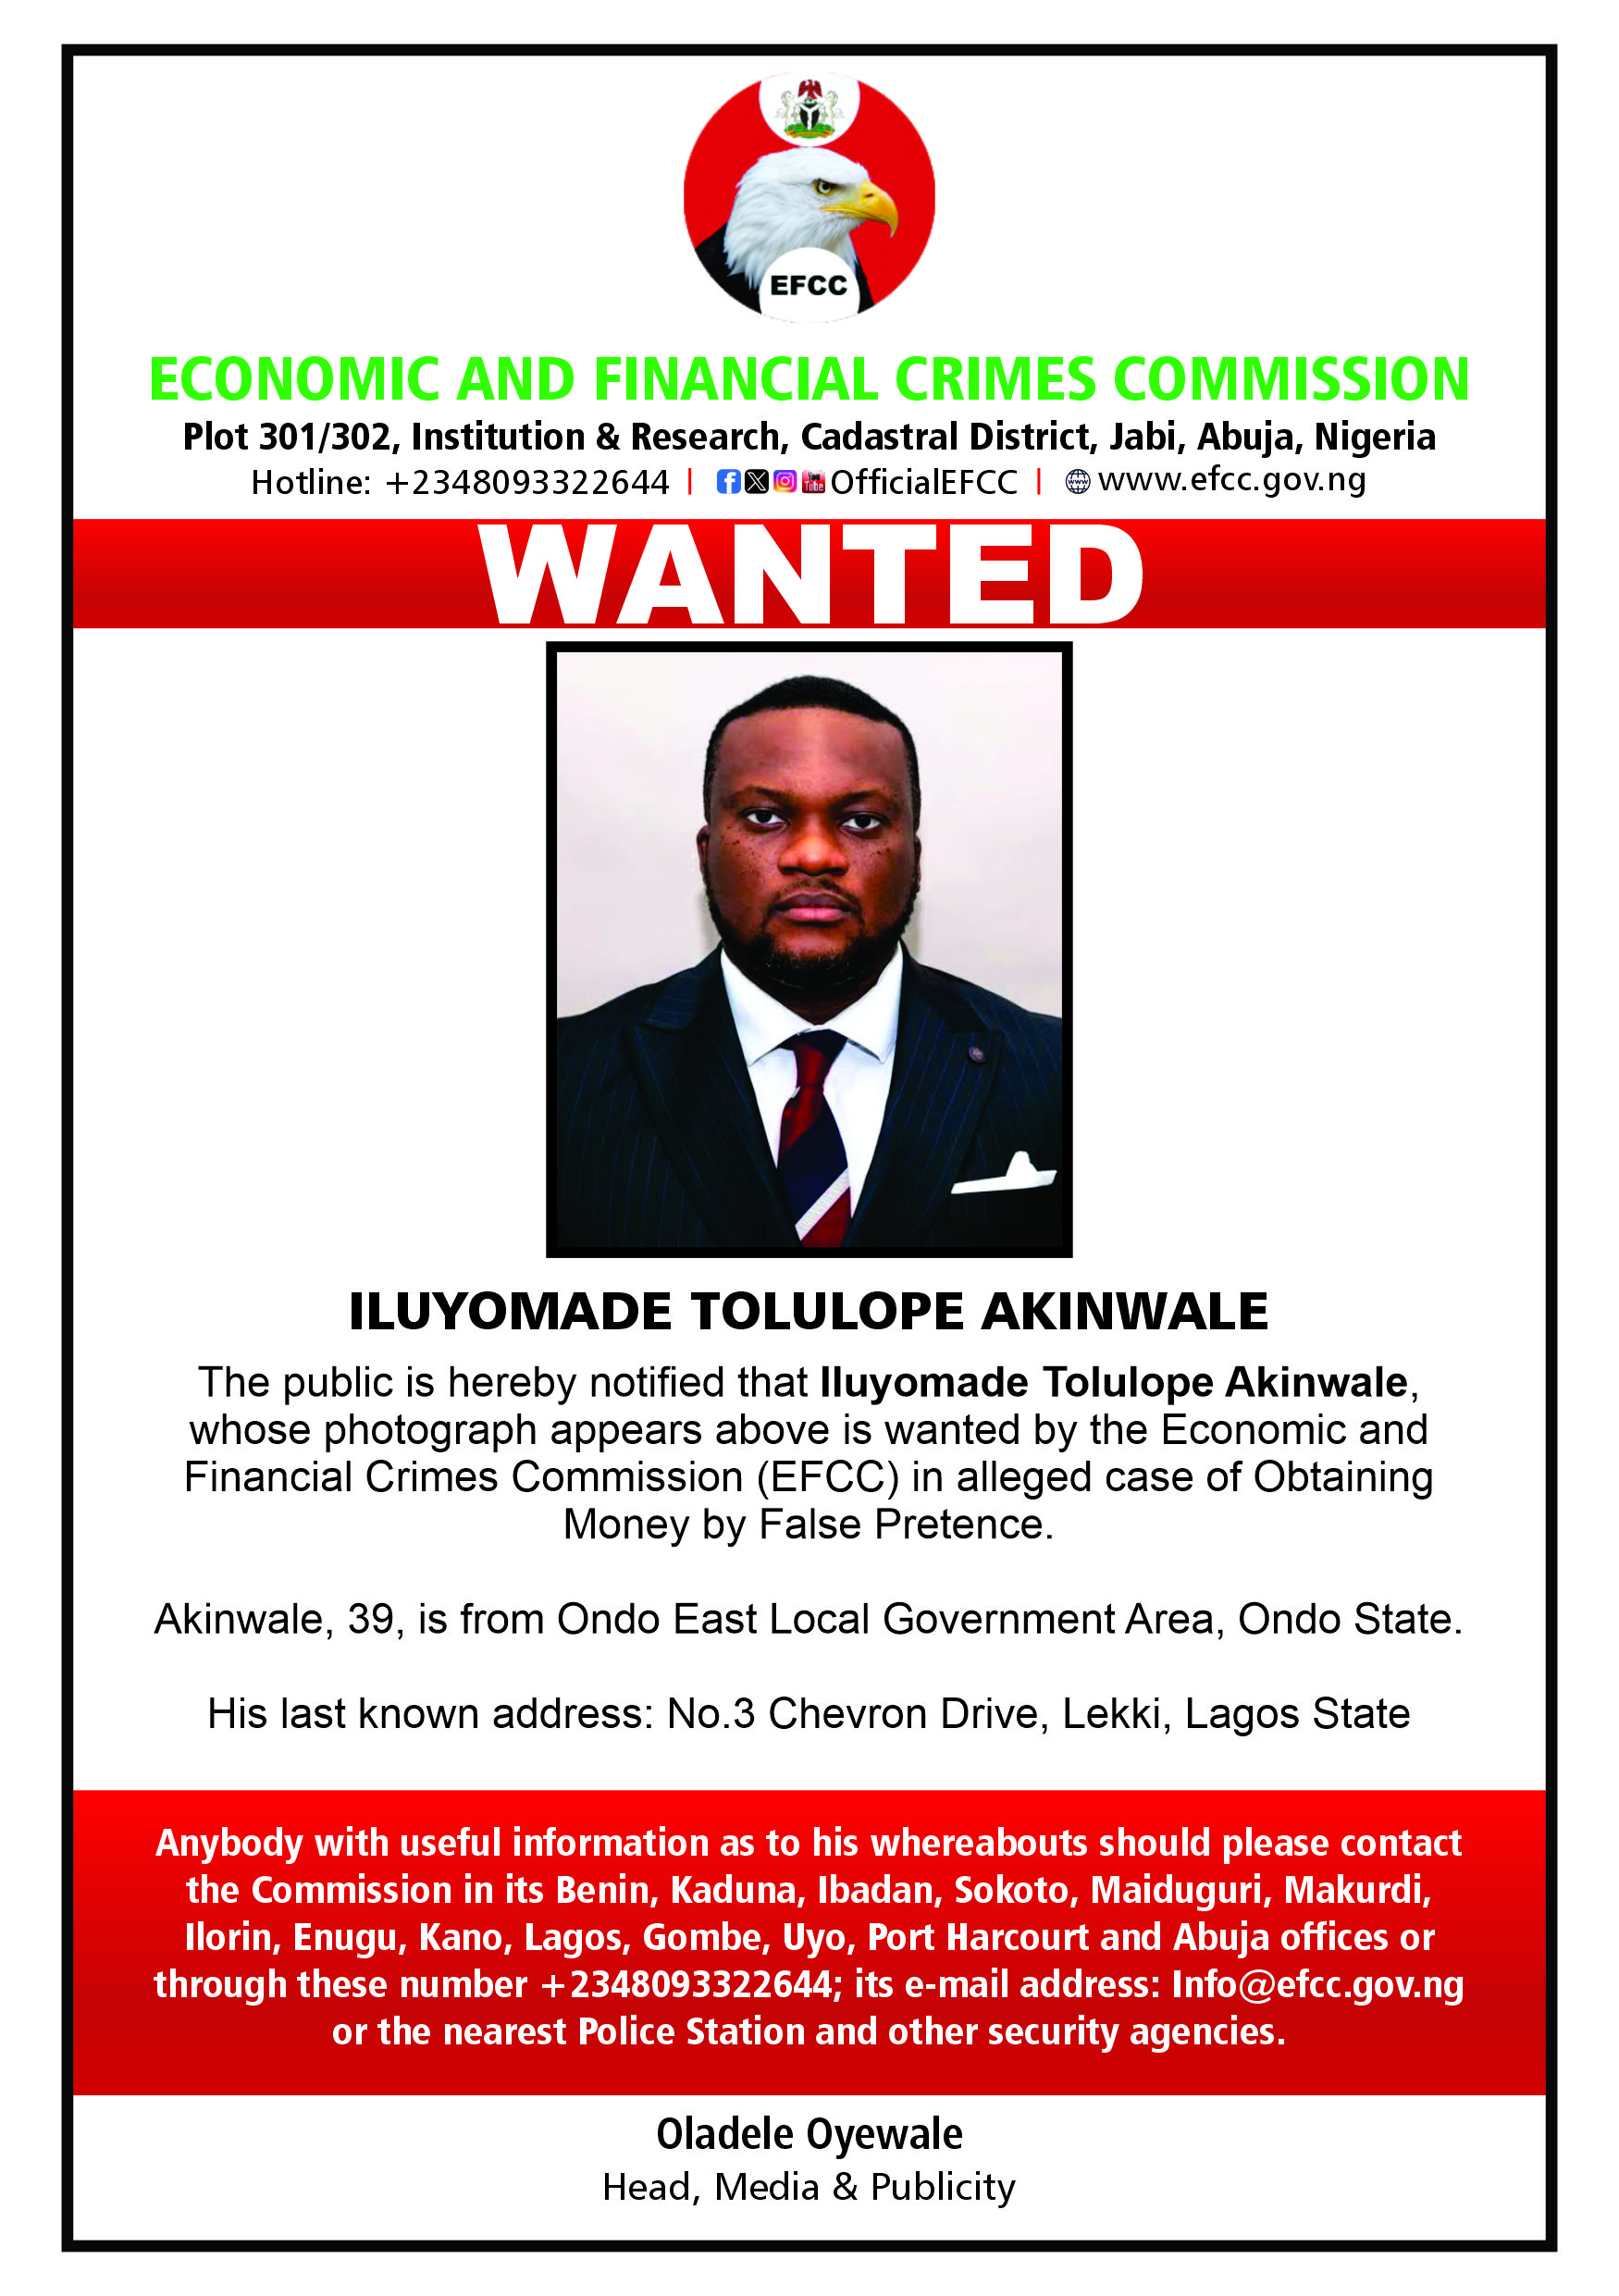 EFCC declares Tolulope Akinwale wanted